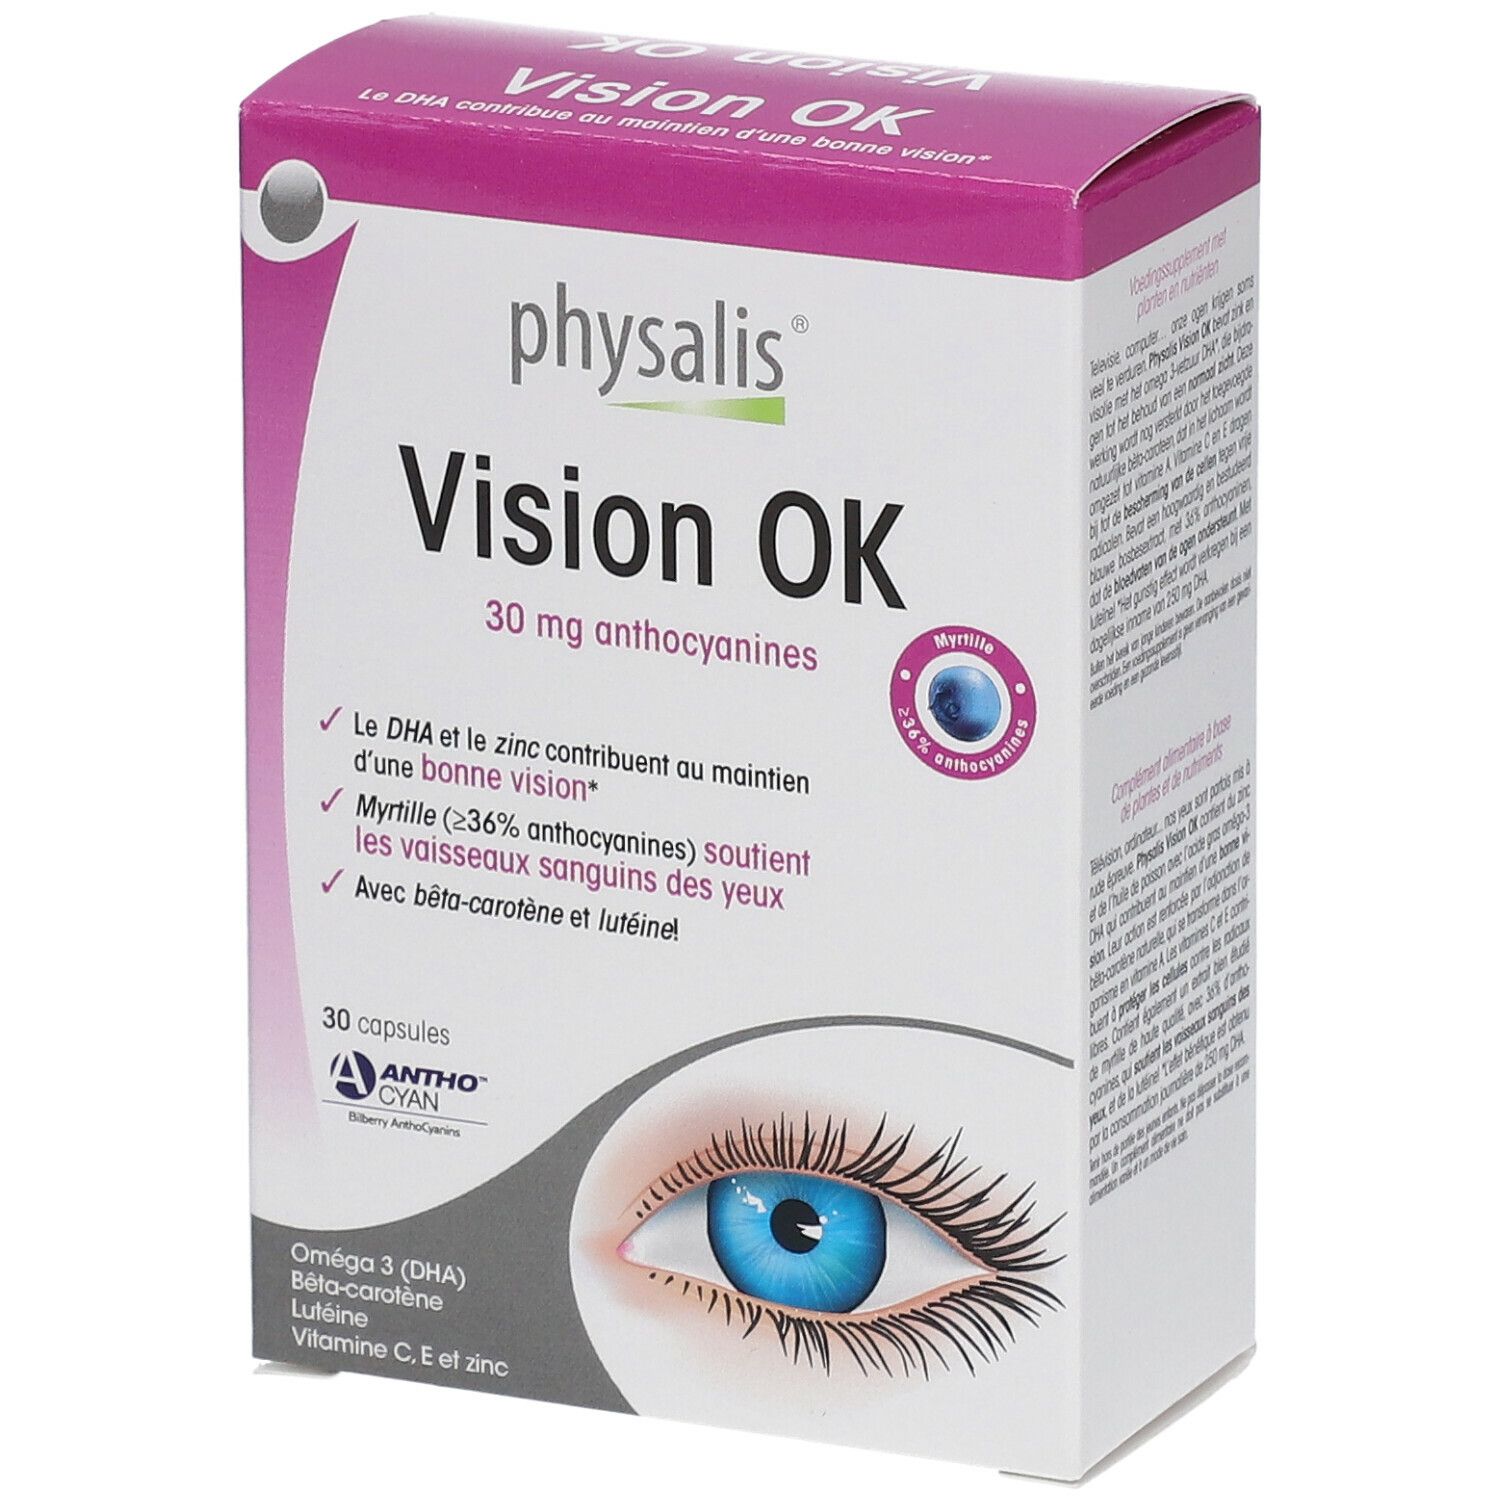 physalis® Vision Ok